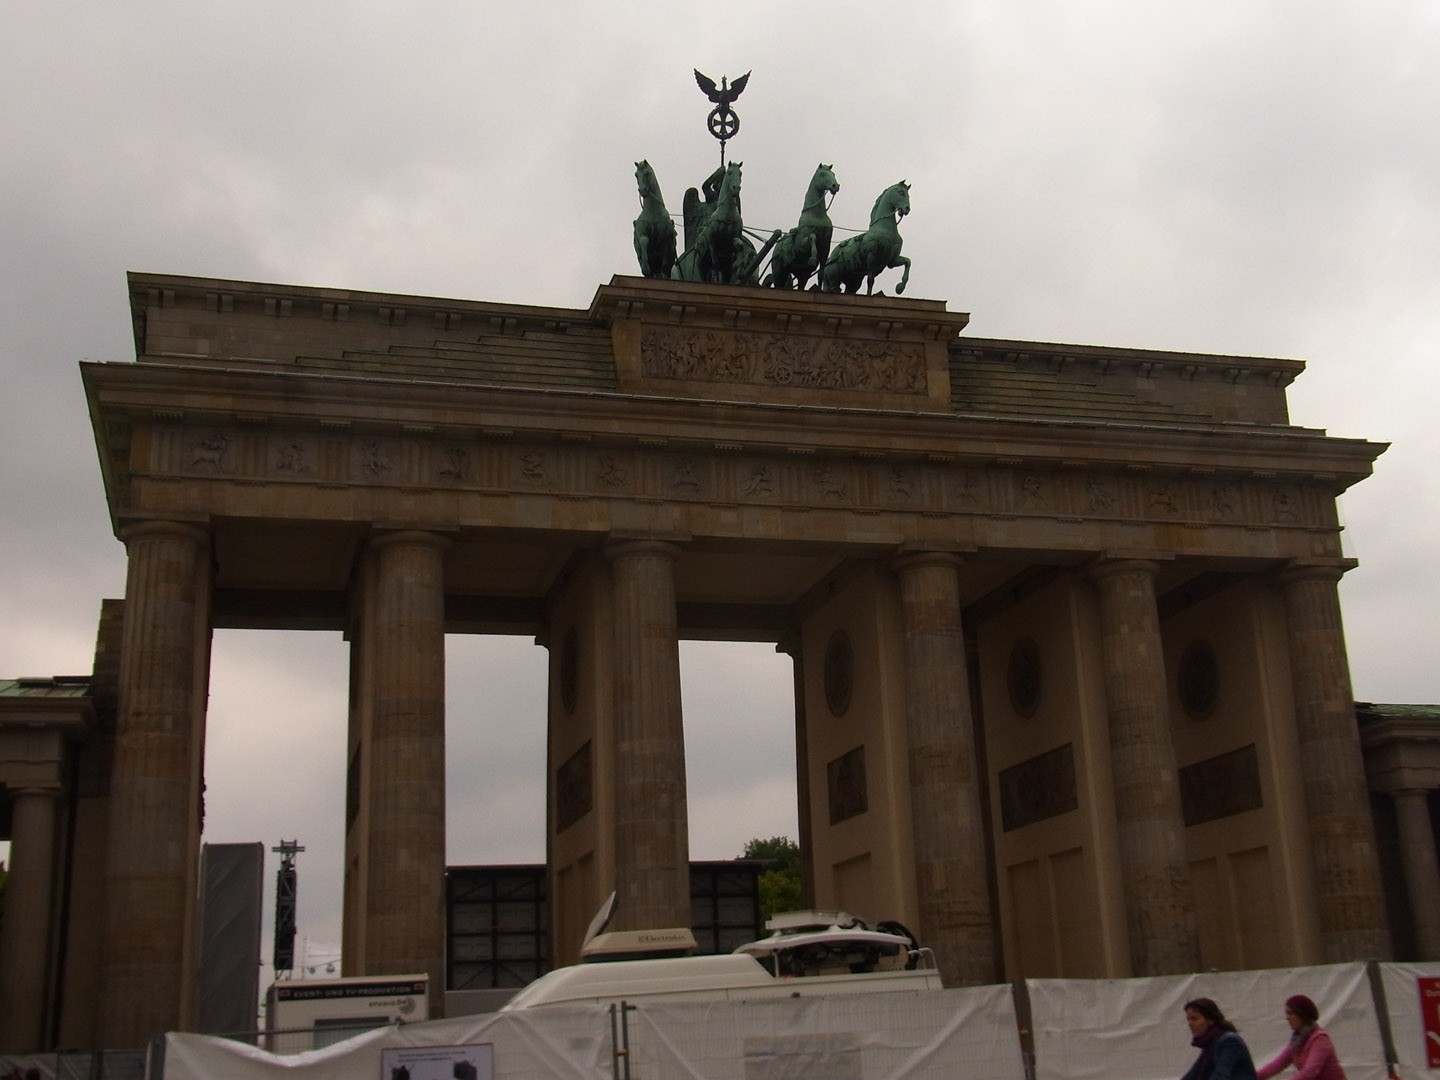 Brandenburg Gate shrouded for the main event of the European Cup Soccer